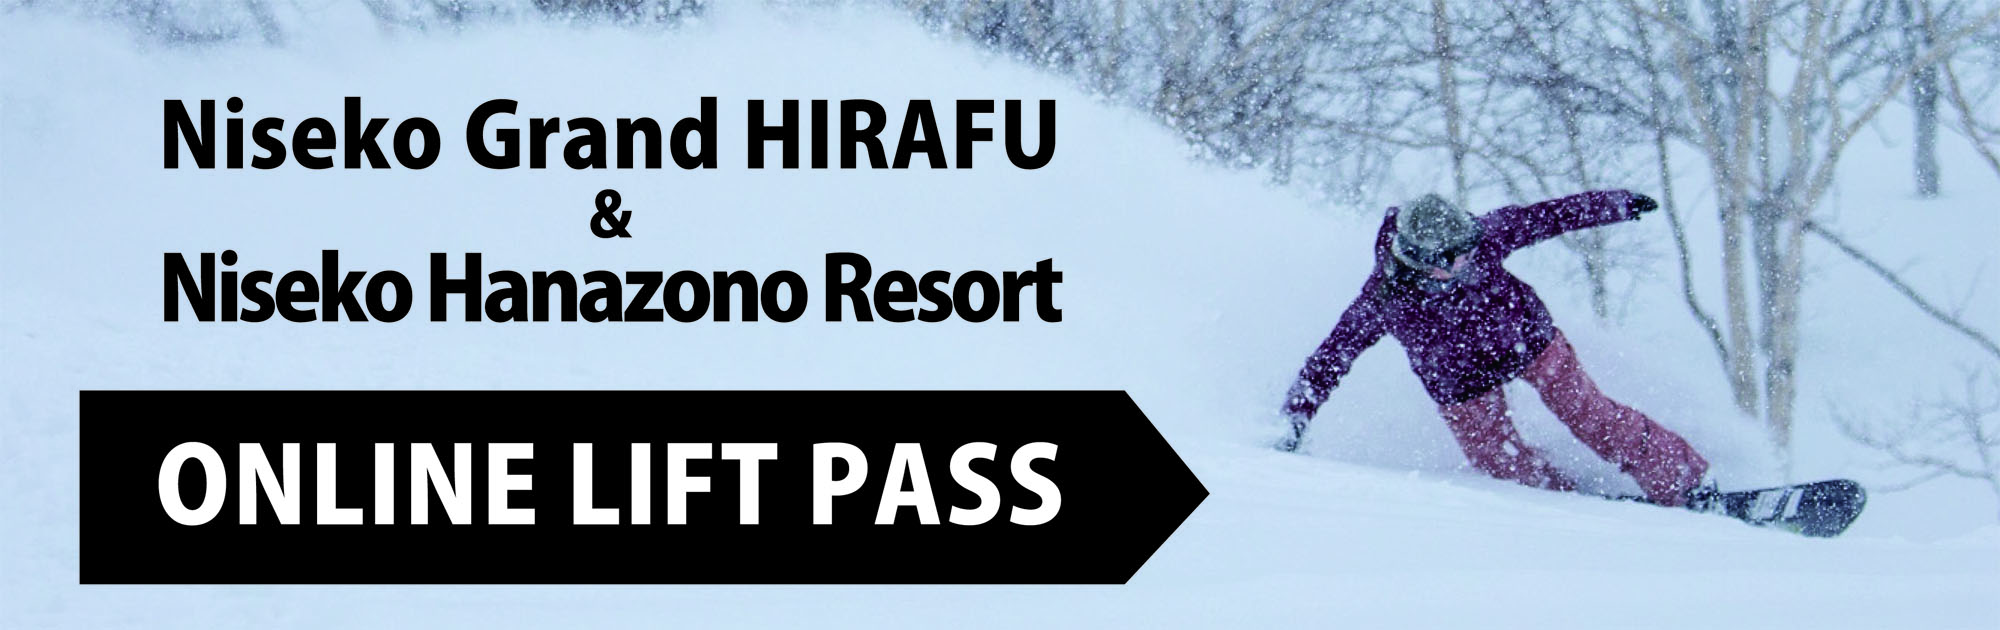 Niseko Grand HIRAHU Niseko Hanazono Resort ONLINE LIFT PASS